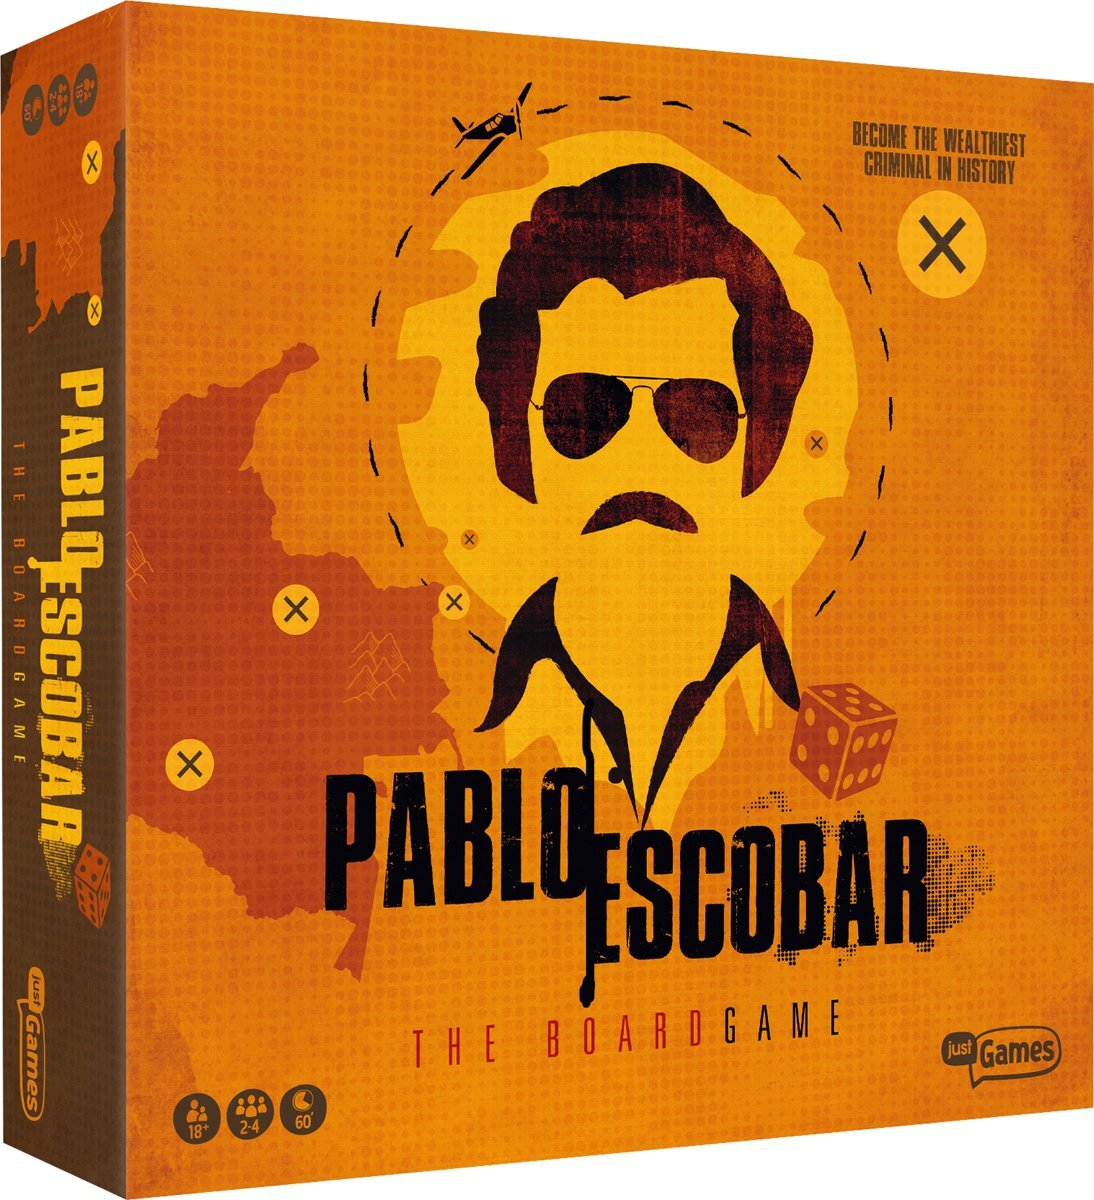 Just Games Pablo Escobar The Boardgame - bordspel - beschikbaar vanaf 5 oktober 2018